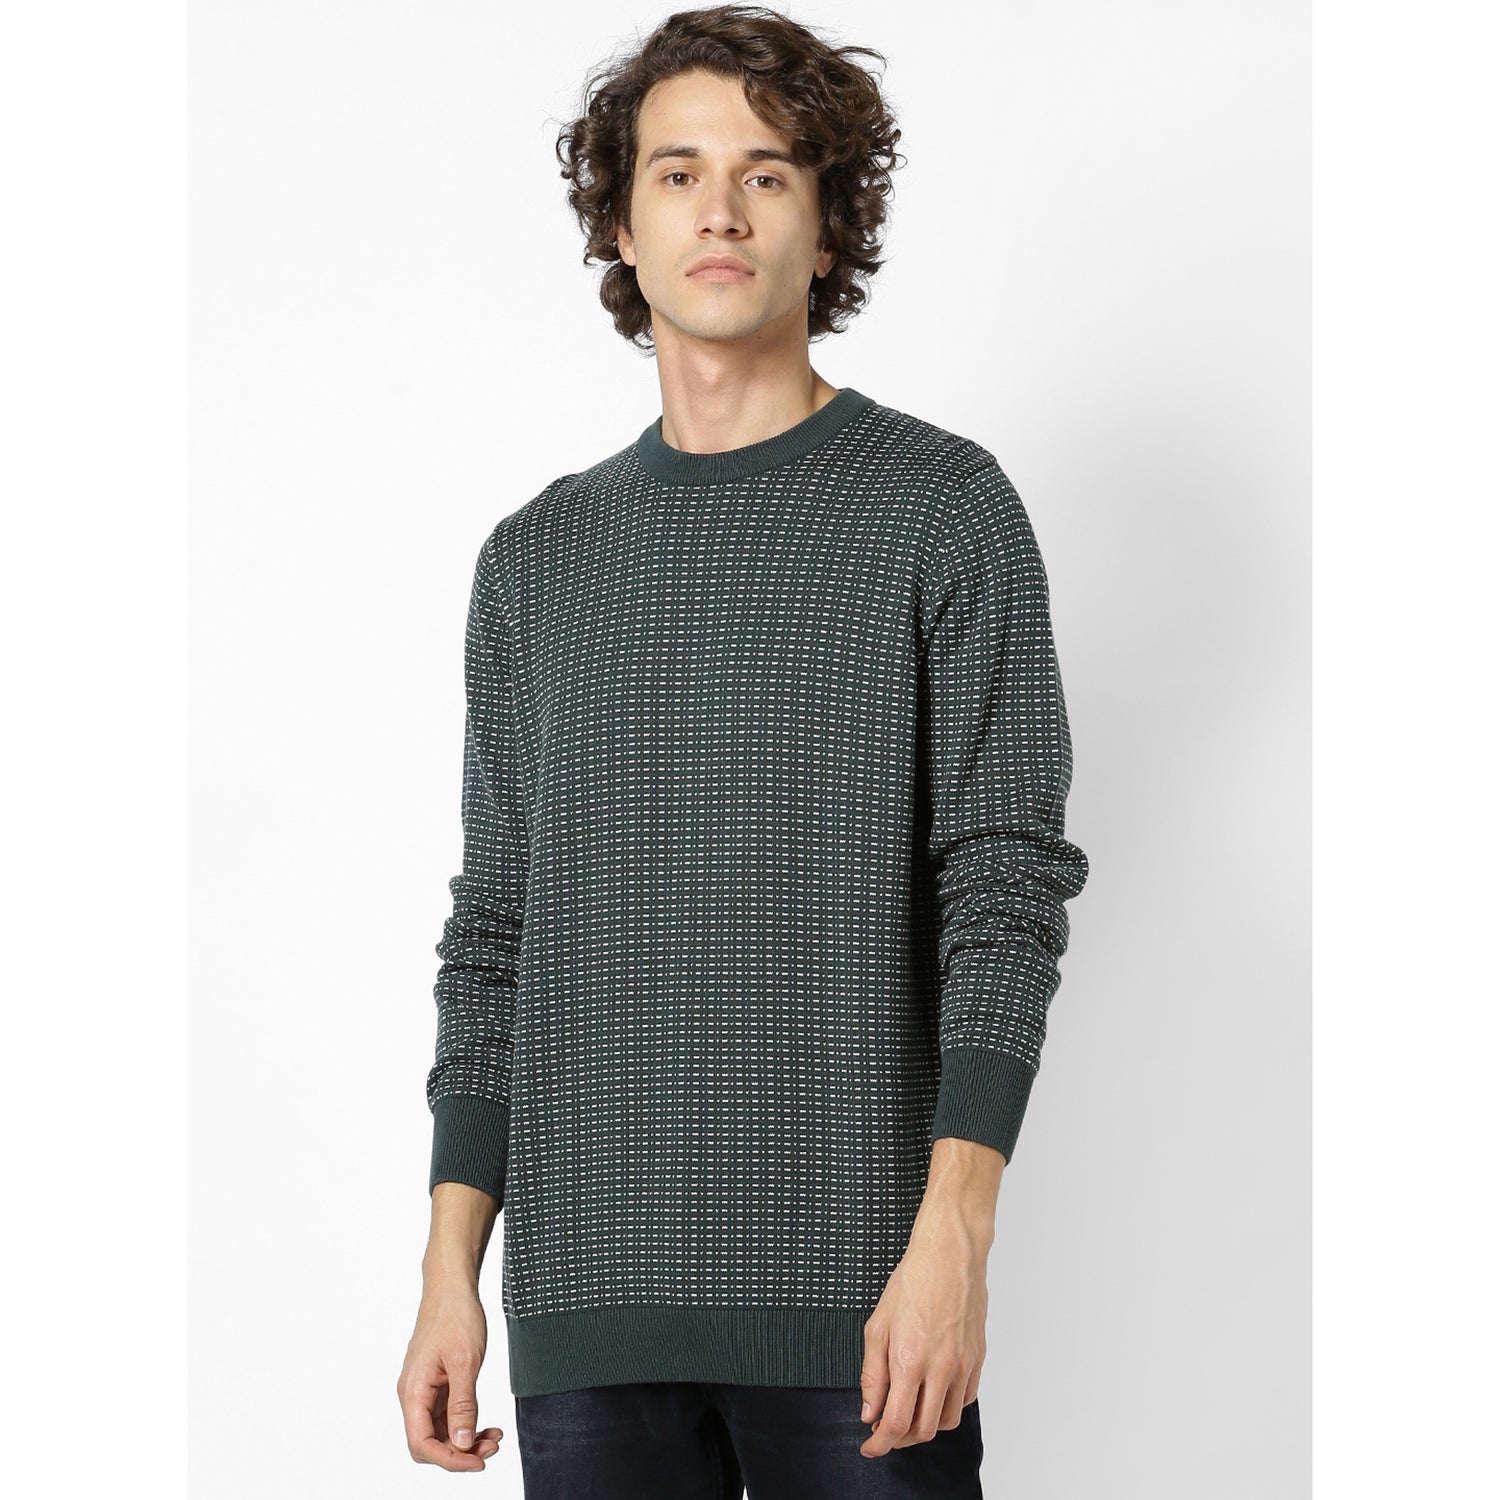 Green and White Self Design Pullover Sweater (PERSO2)